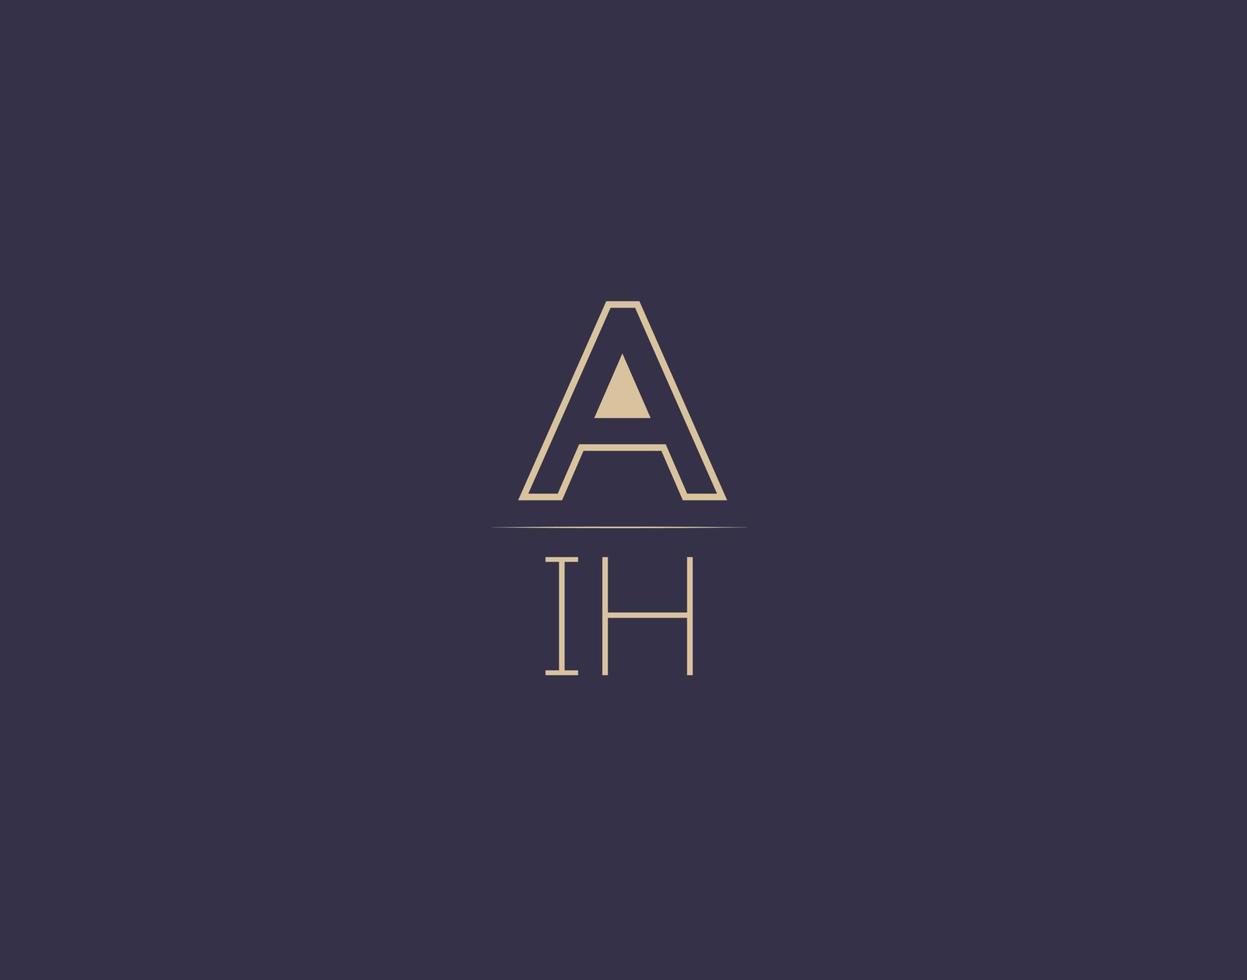 aih letter logo design imagens vetoriais minimalistas modernas vetor